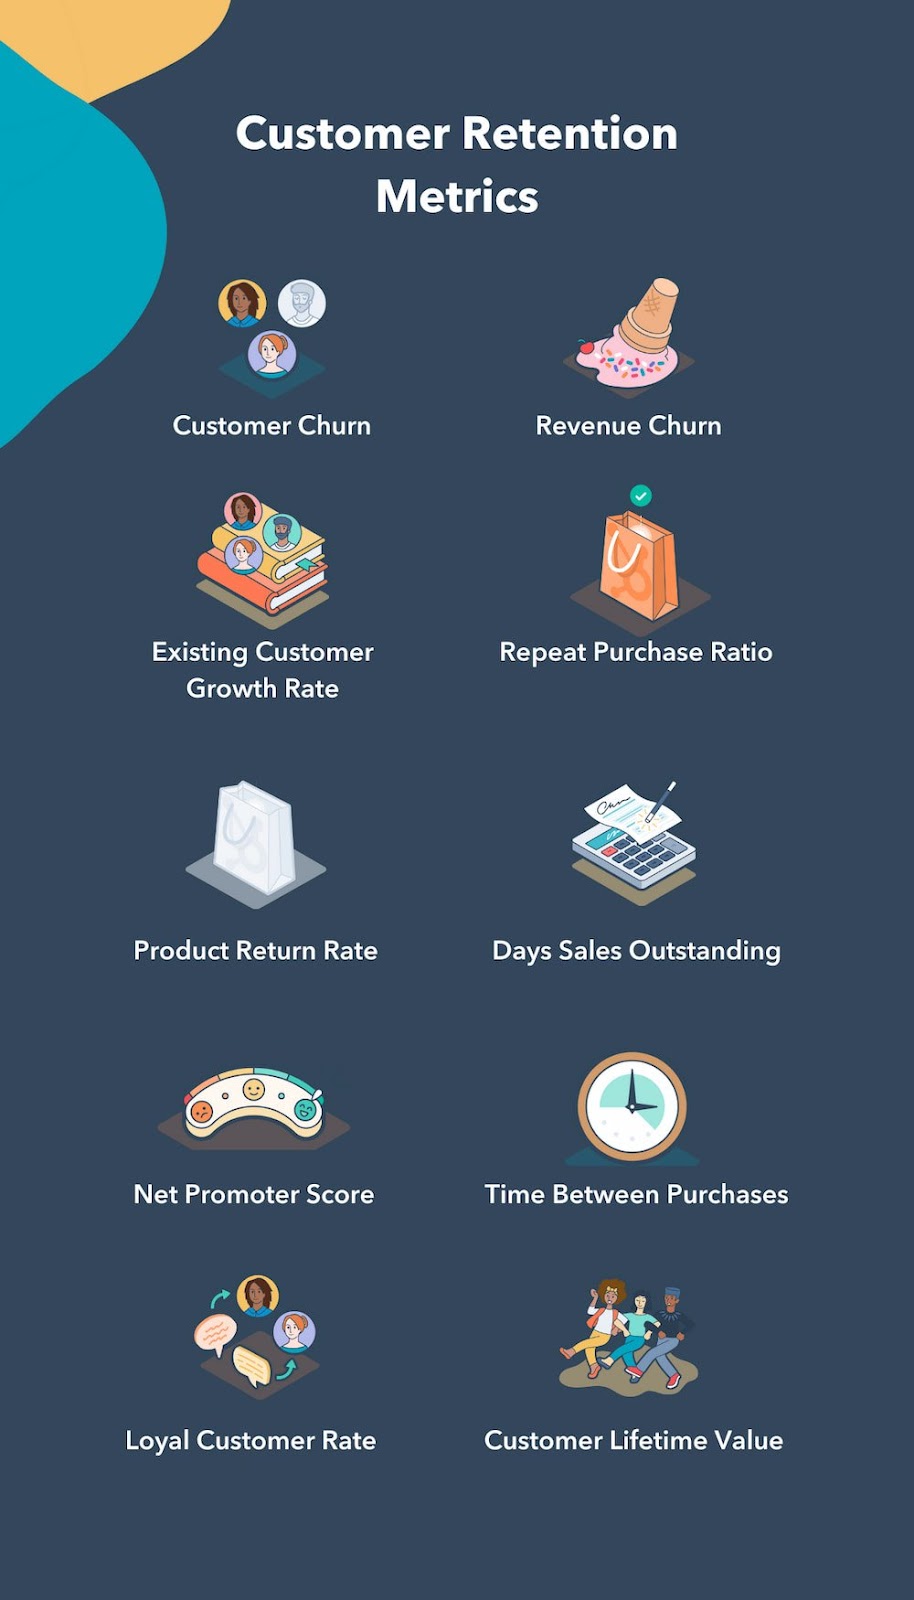 Customer retention metrics list graphic